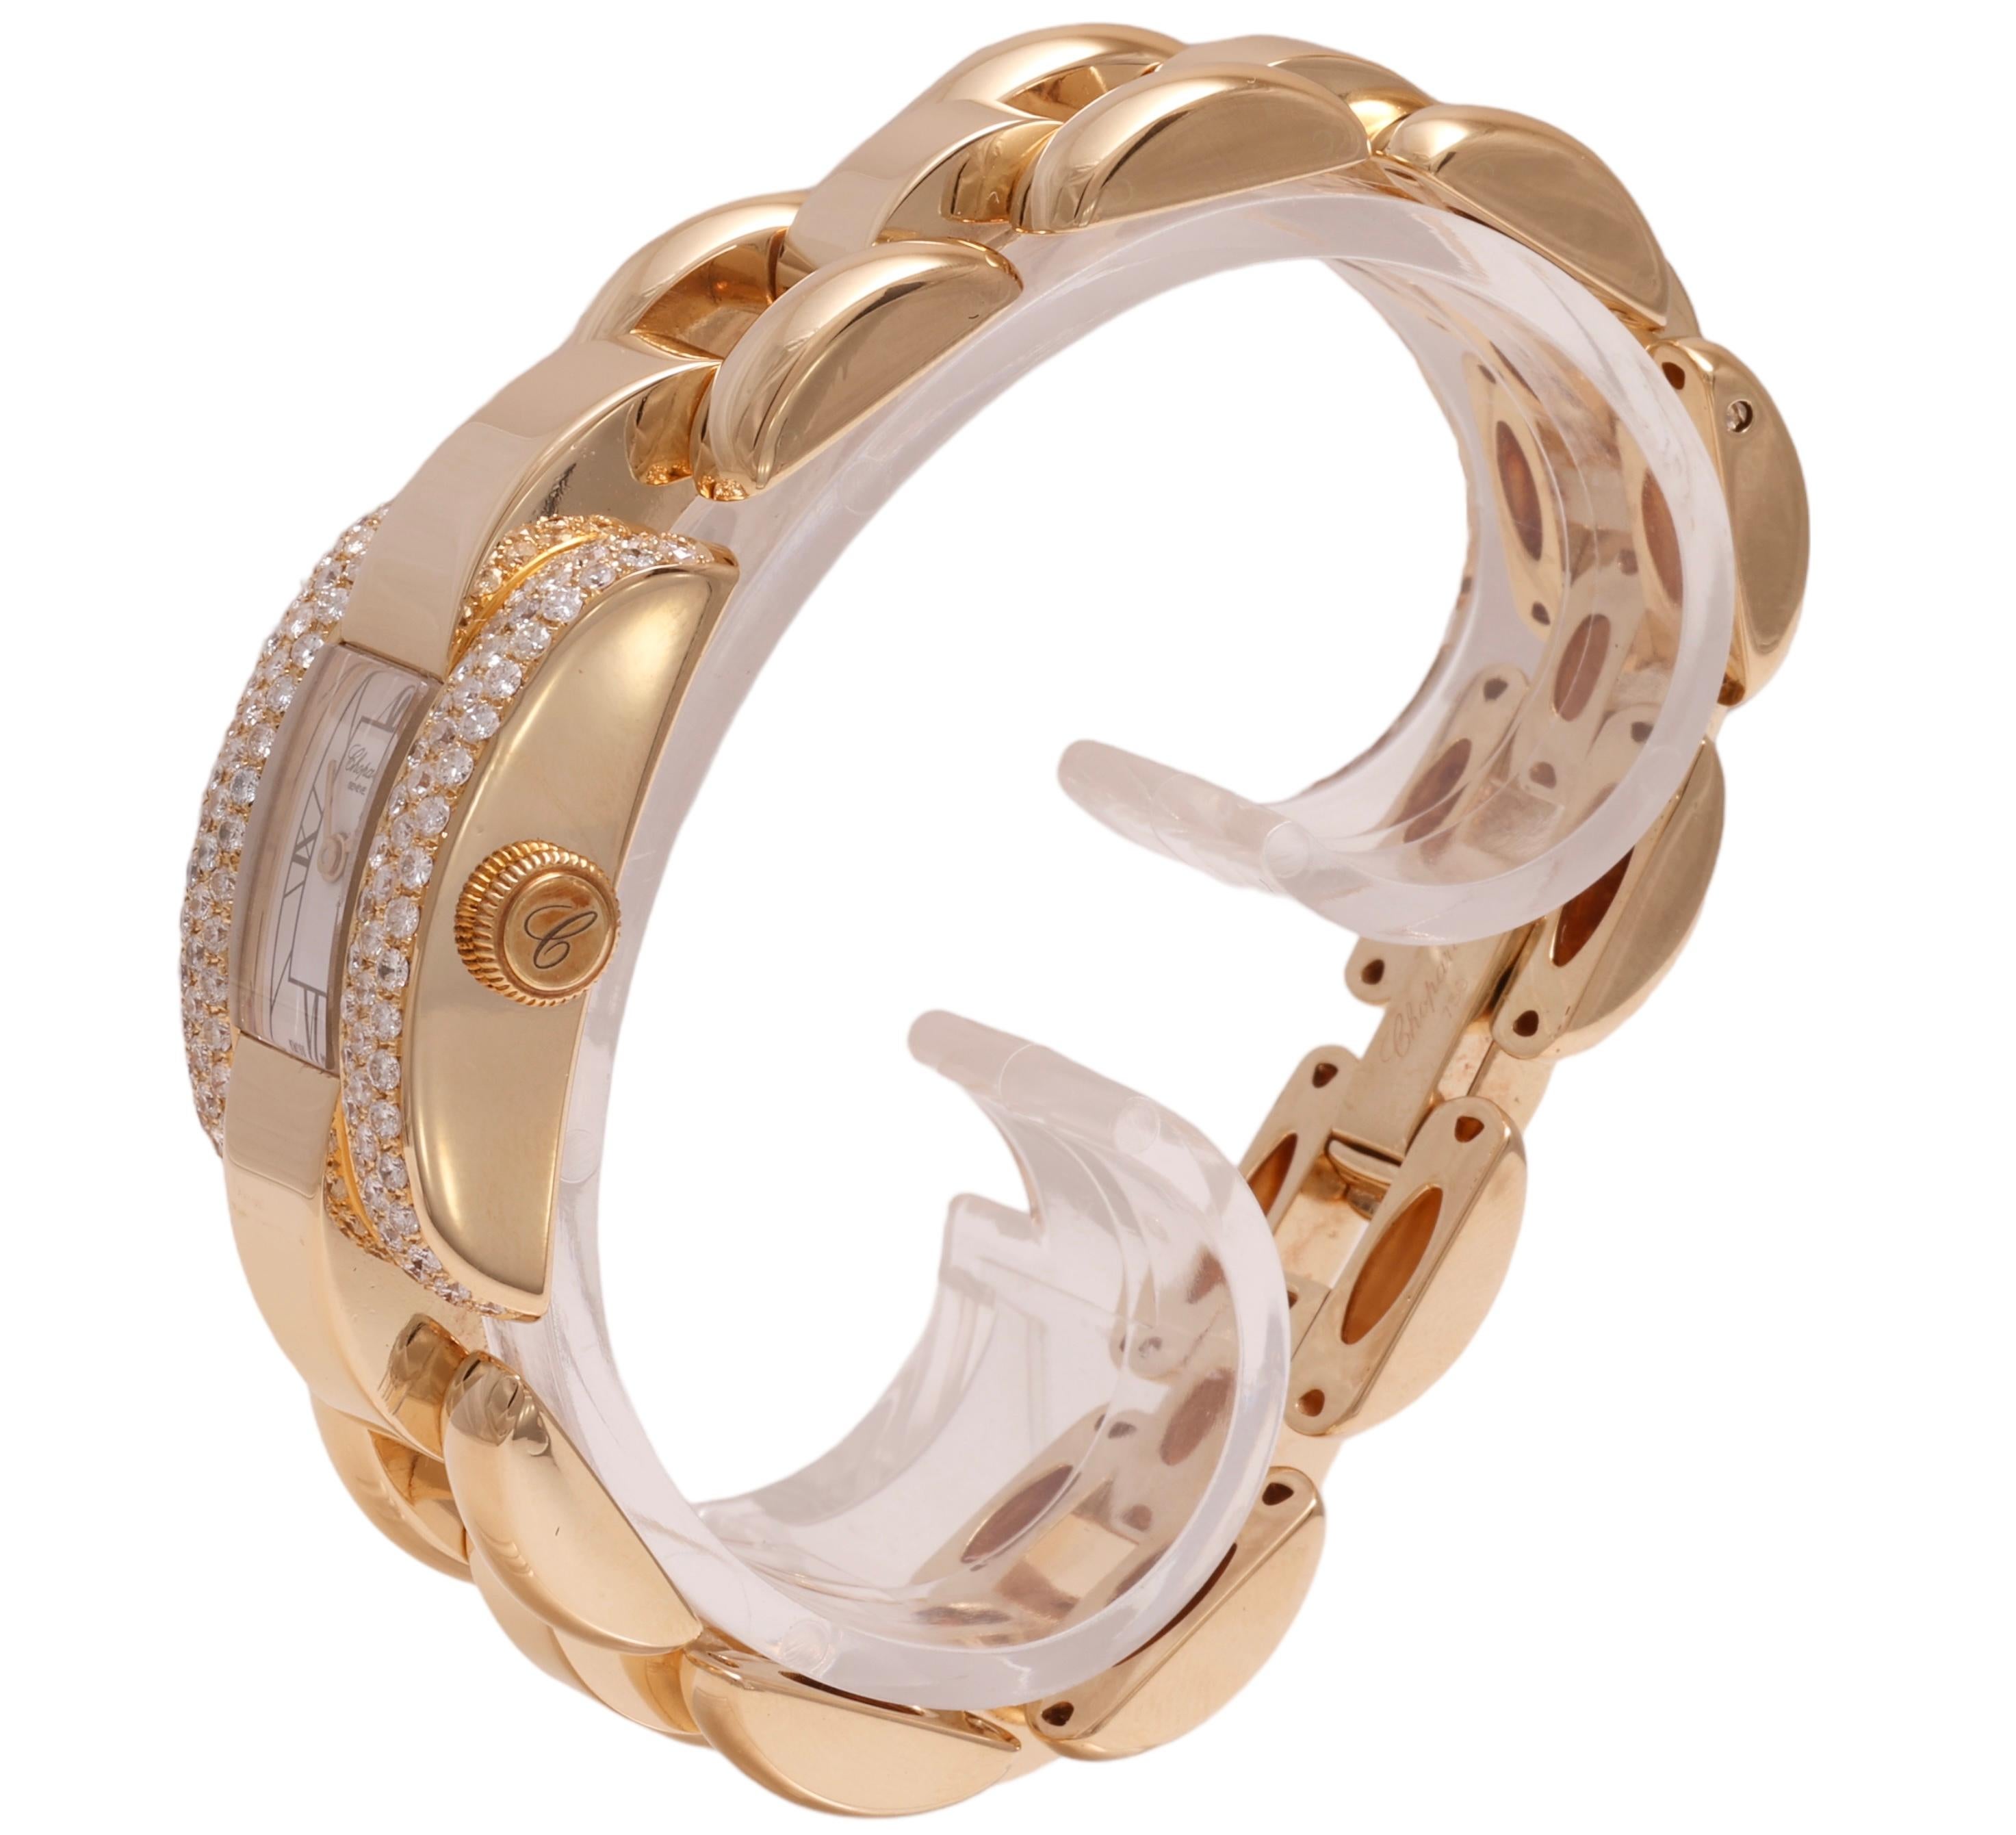 Brilliant Cut 18 Kt. Gold & Diamonds Chopard La Strada Wrist Watch For Sale